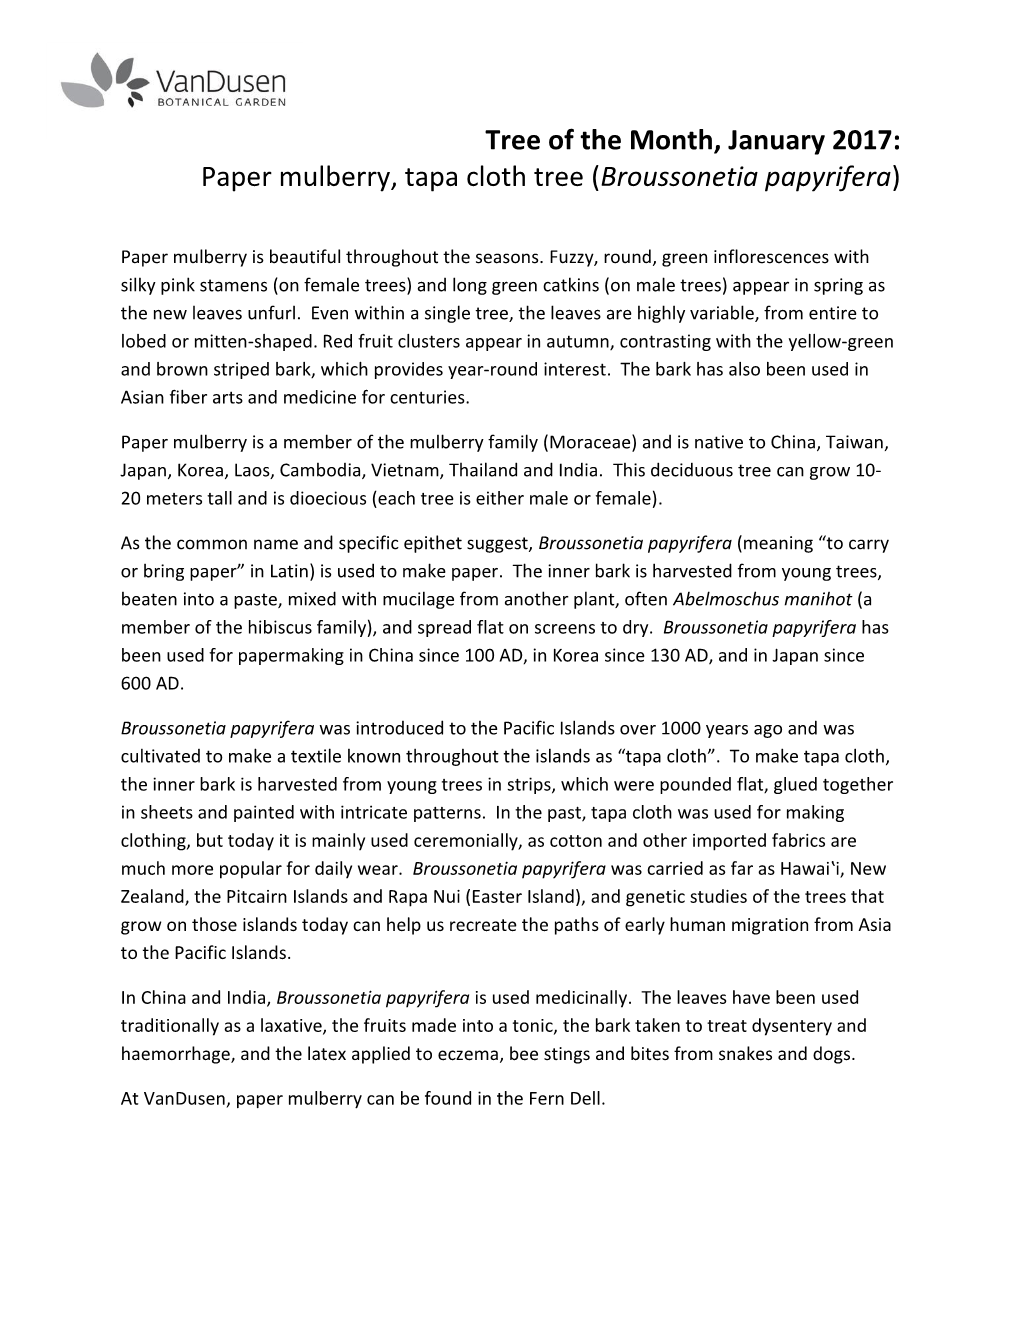 Tree of the Month, January 2017: Paper Mulberry, Tapa Cloth Tree (Broussonetia Papyrifera)